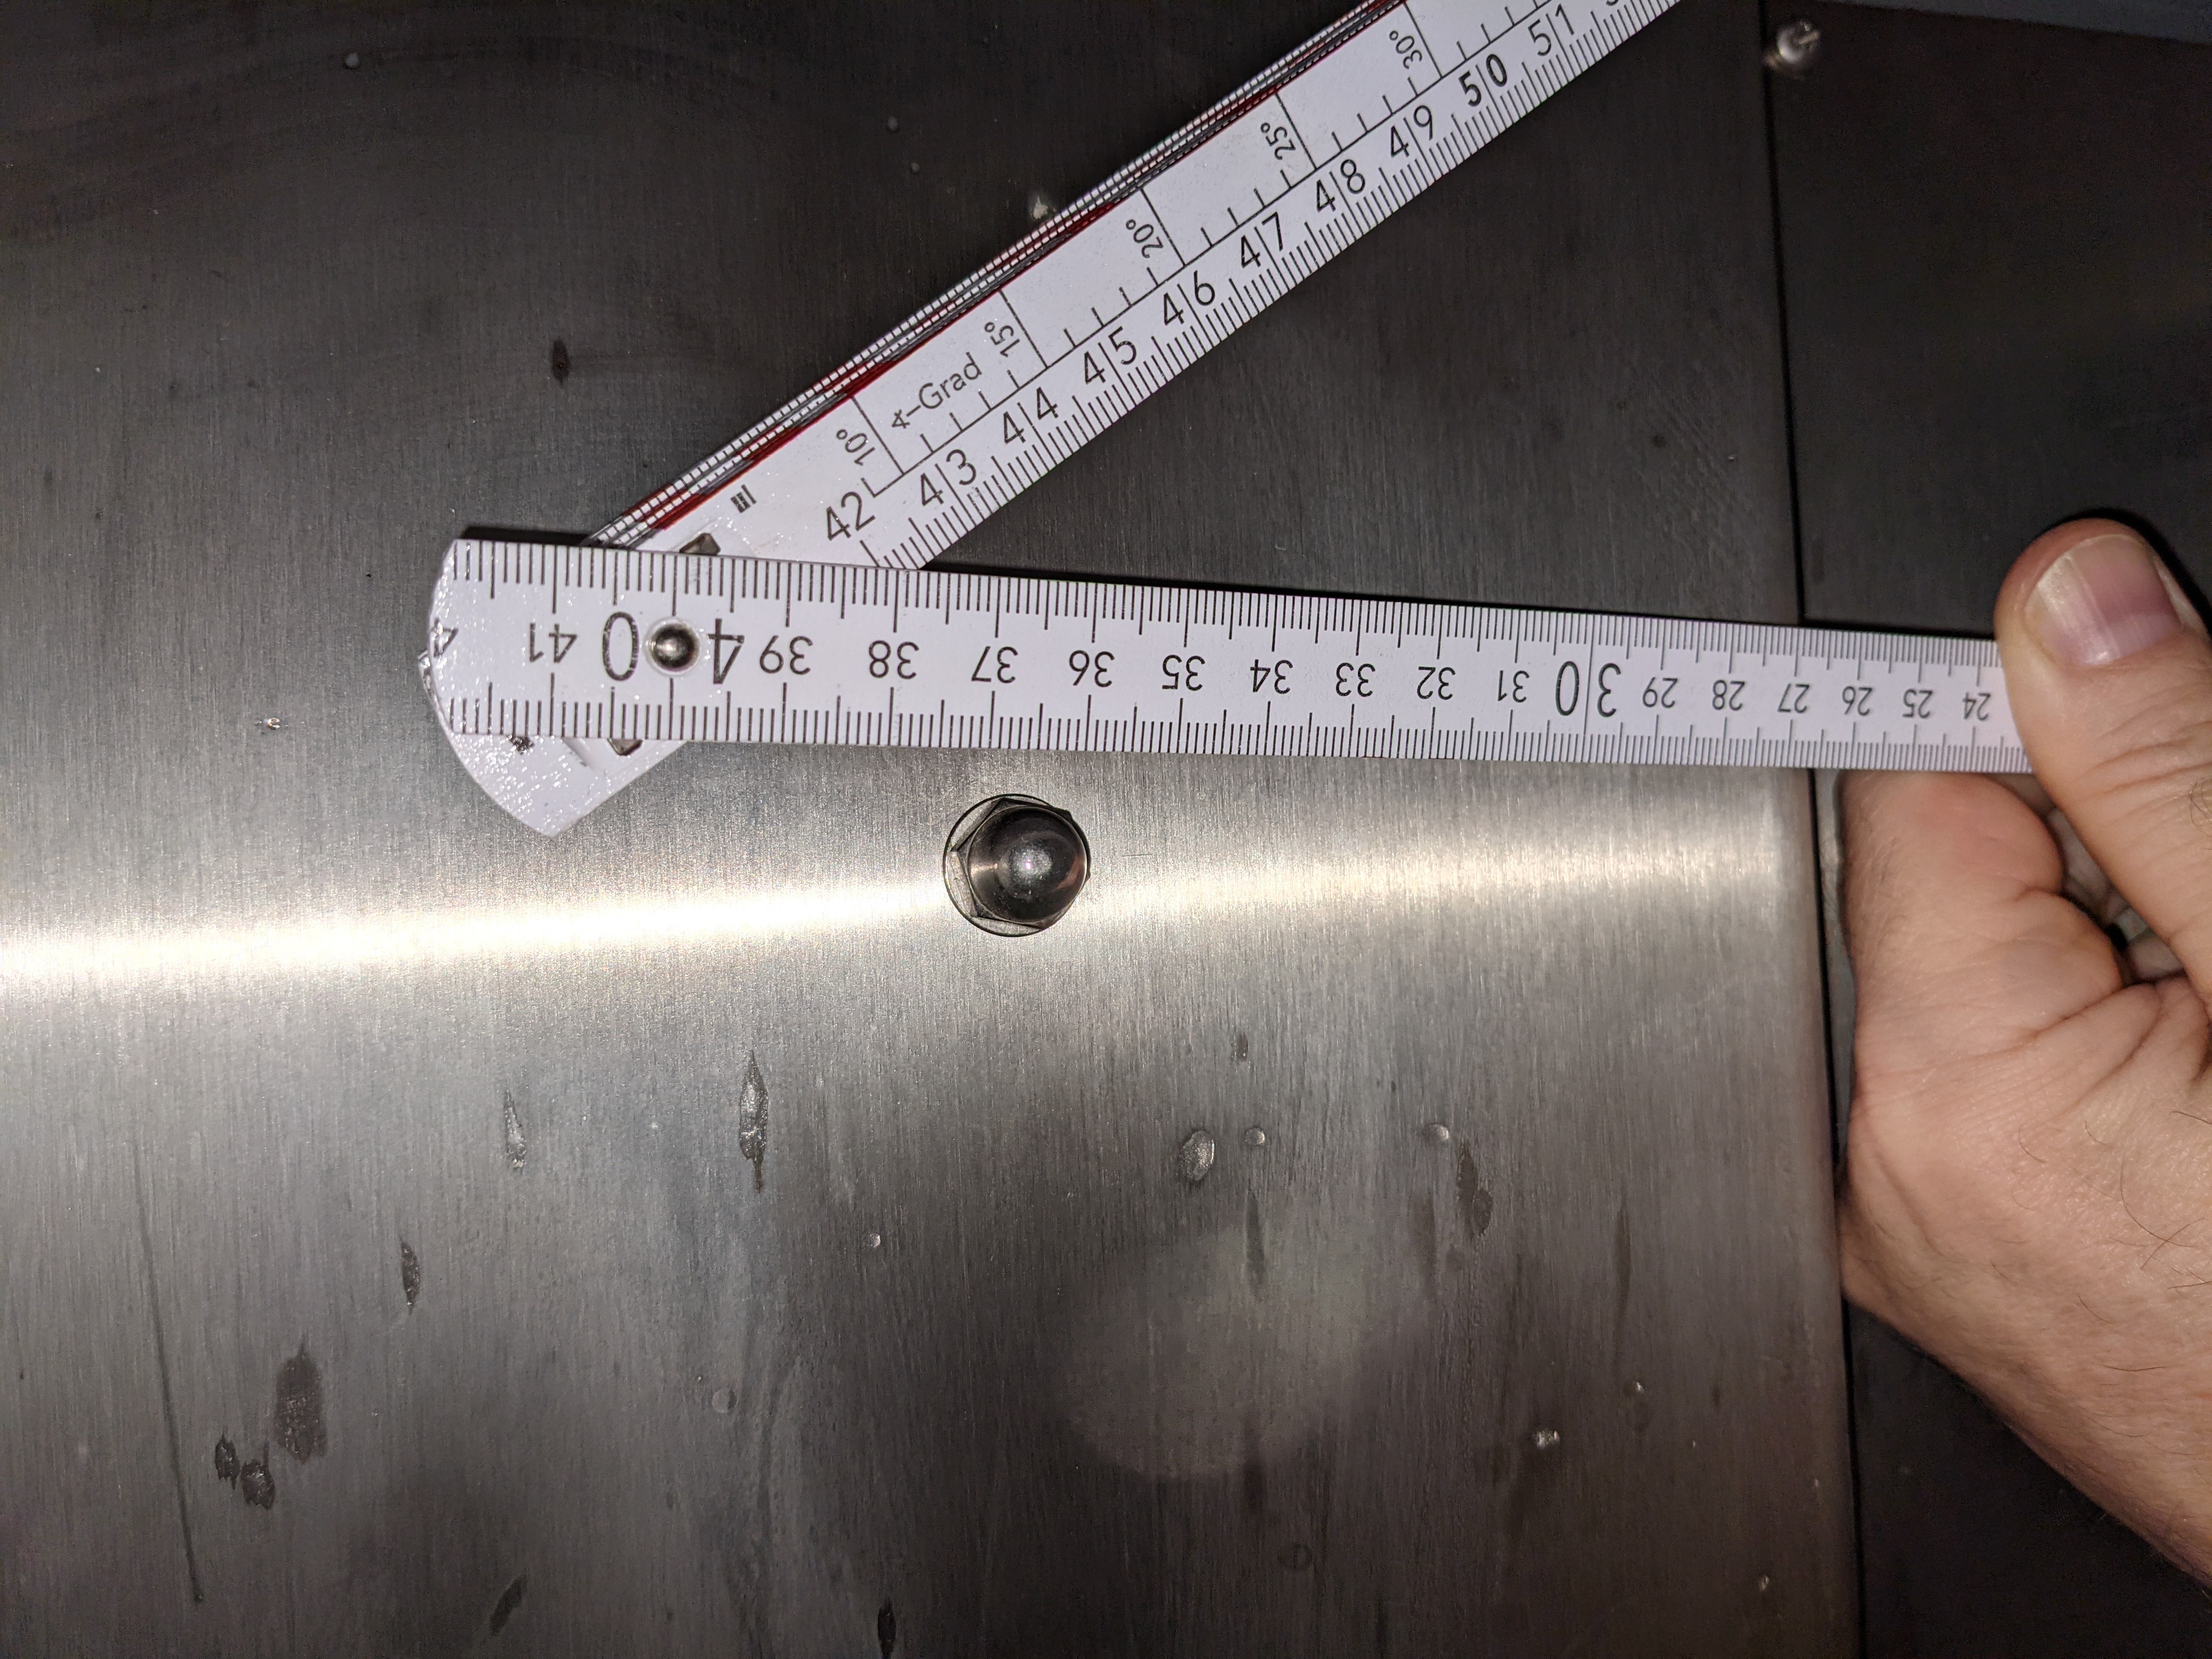 Höhe der Löcher am VA Blech ist von der unteren Kante am Blech gemessen 365,0 mm